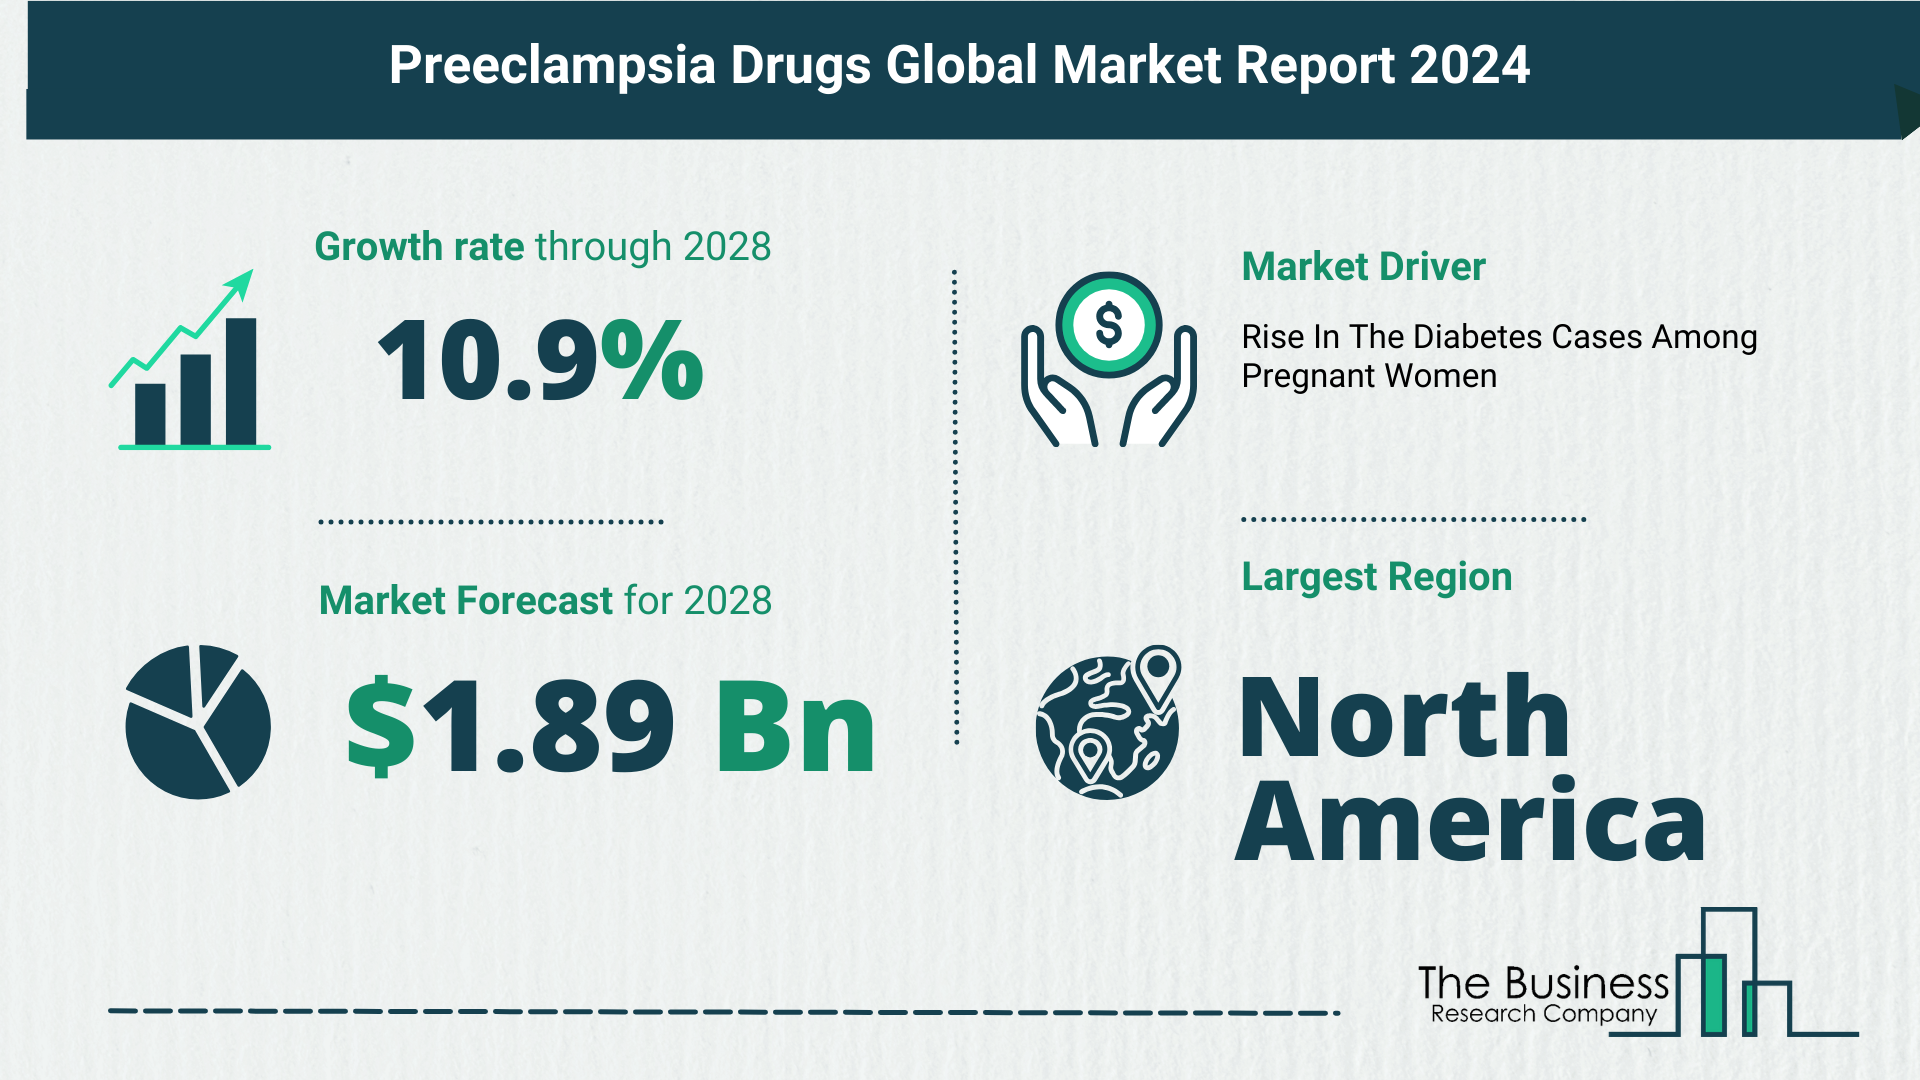 Global Preeclampsia Drugs Market